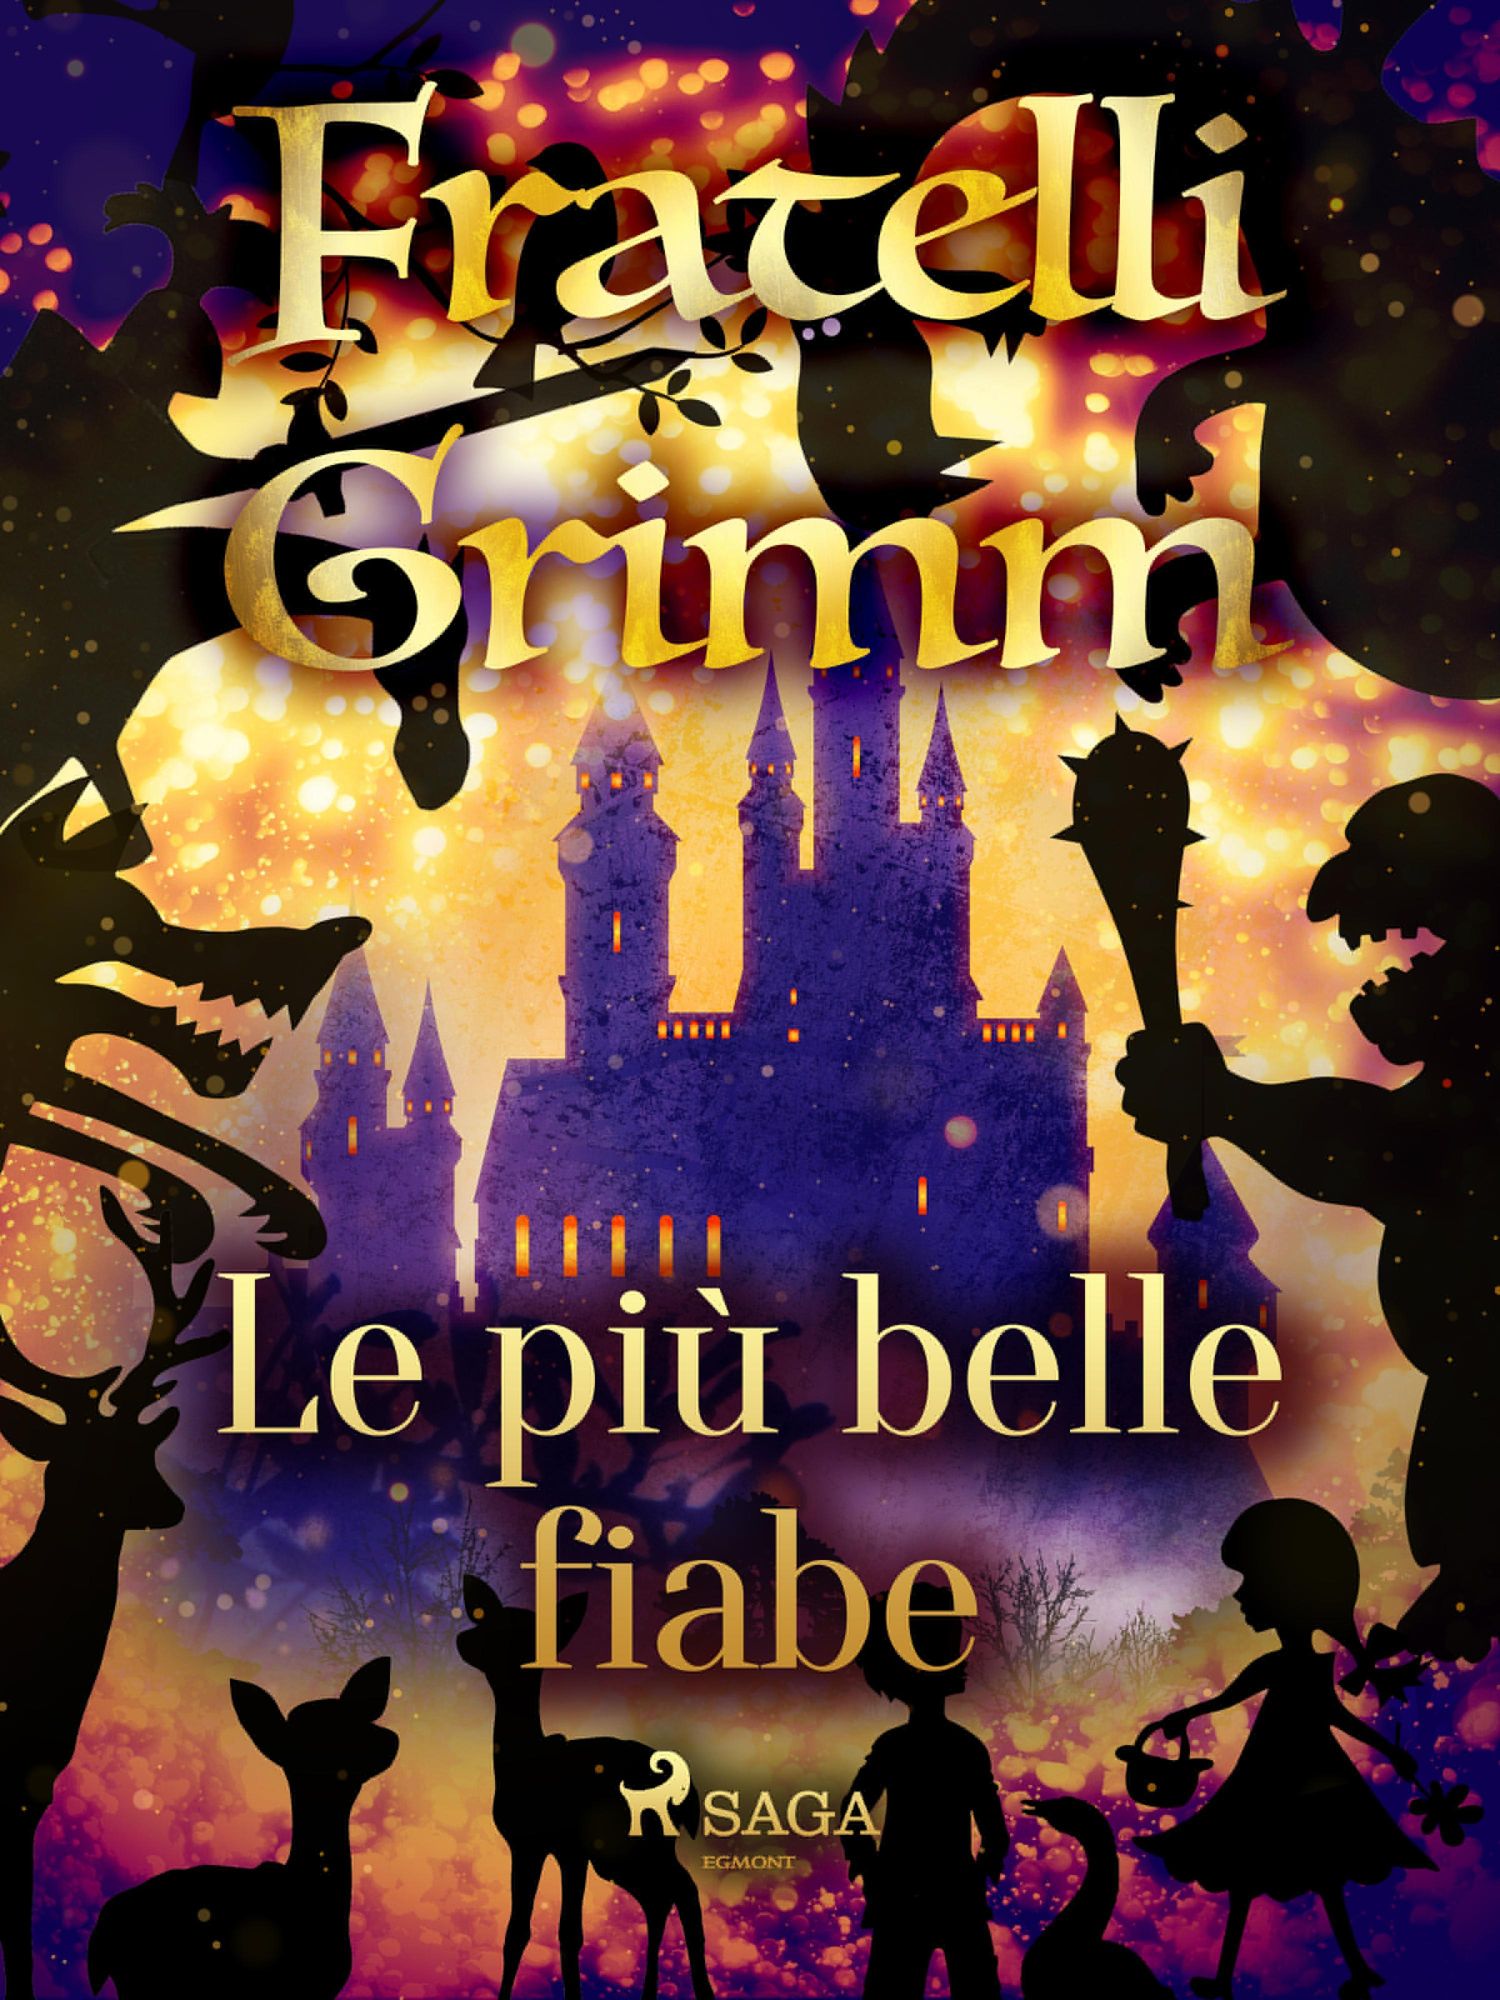 Le più belle fiabe dei fratelli Grimm' von 'Brothers Grimm' - eBook